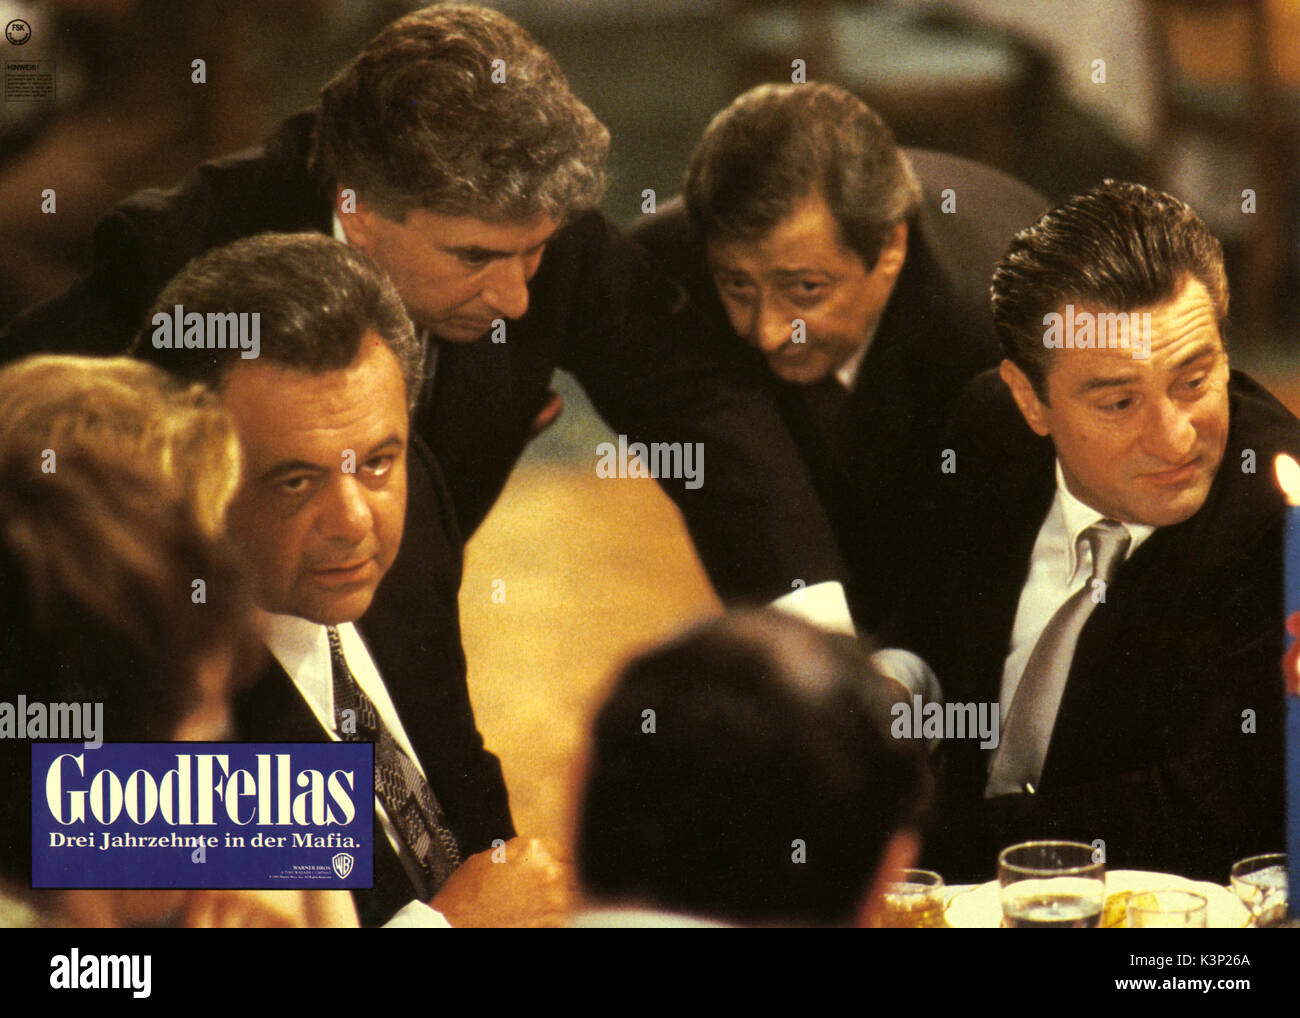 GOODFELLAS [US 1993] PAUL SORVINO [left], ROBERT DE NIRO [right]     Date: 1993 Stock Photo